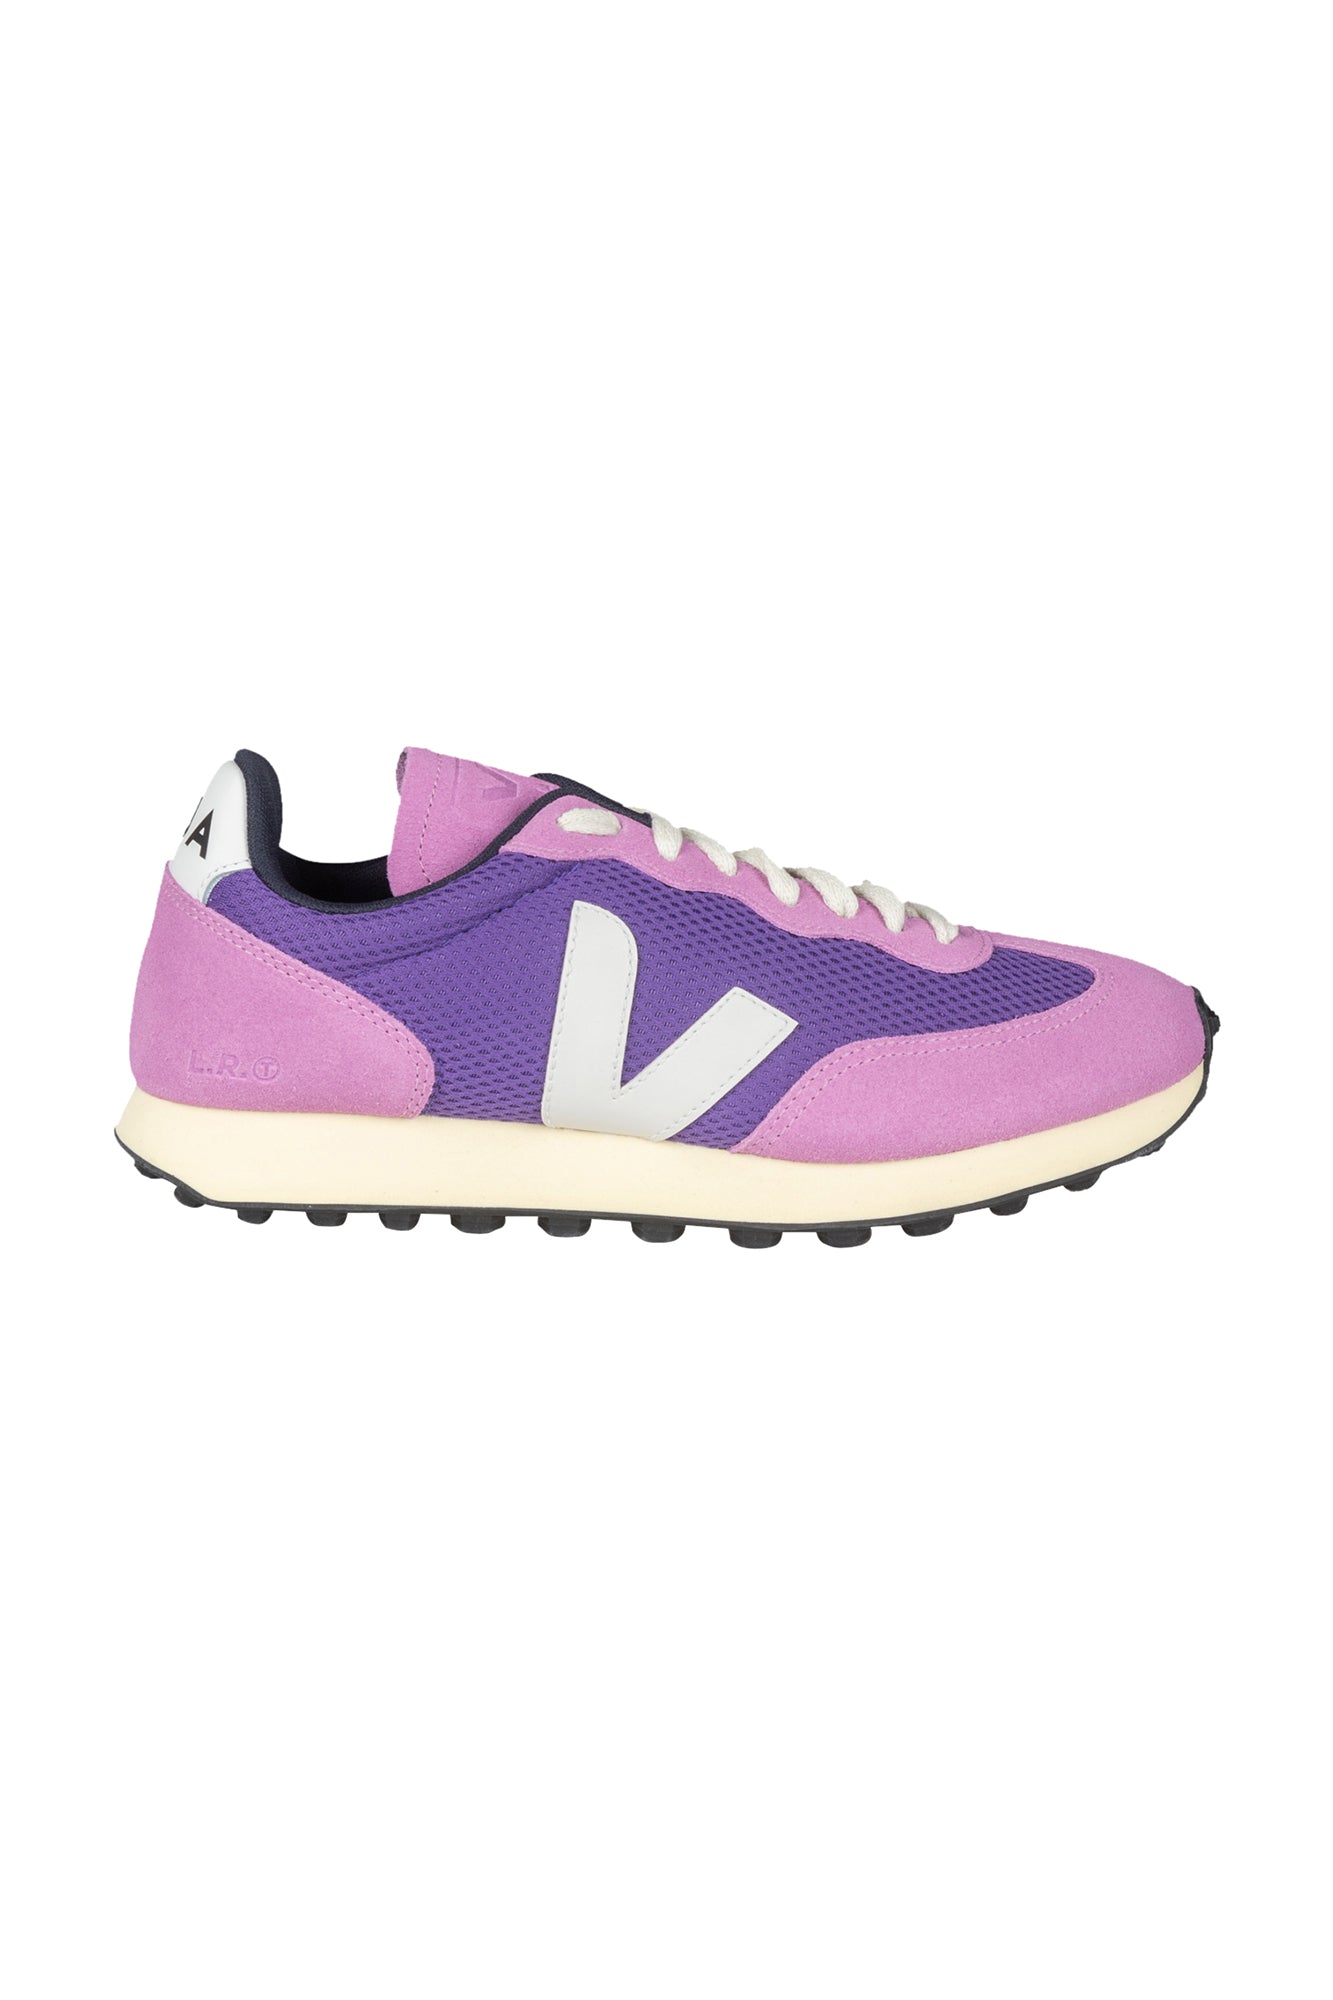 Veja - Sneakers - 420198 - Viola/Fuxia